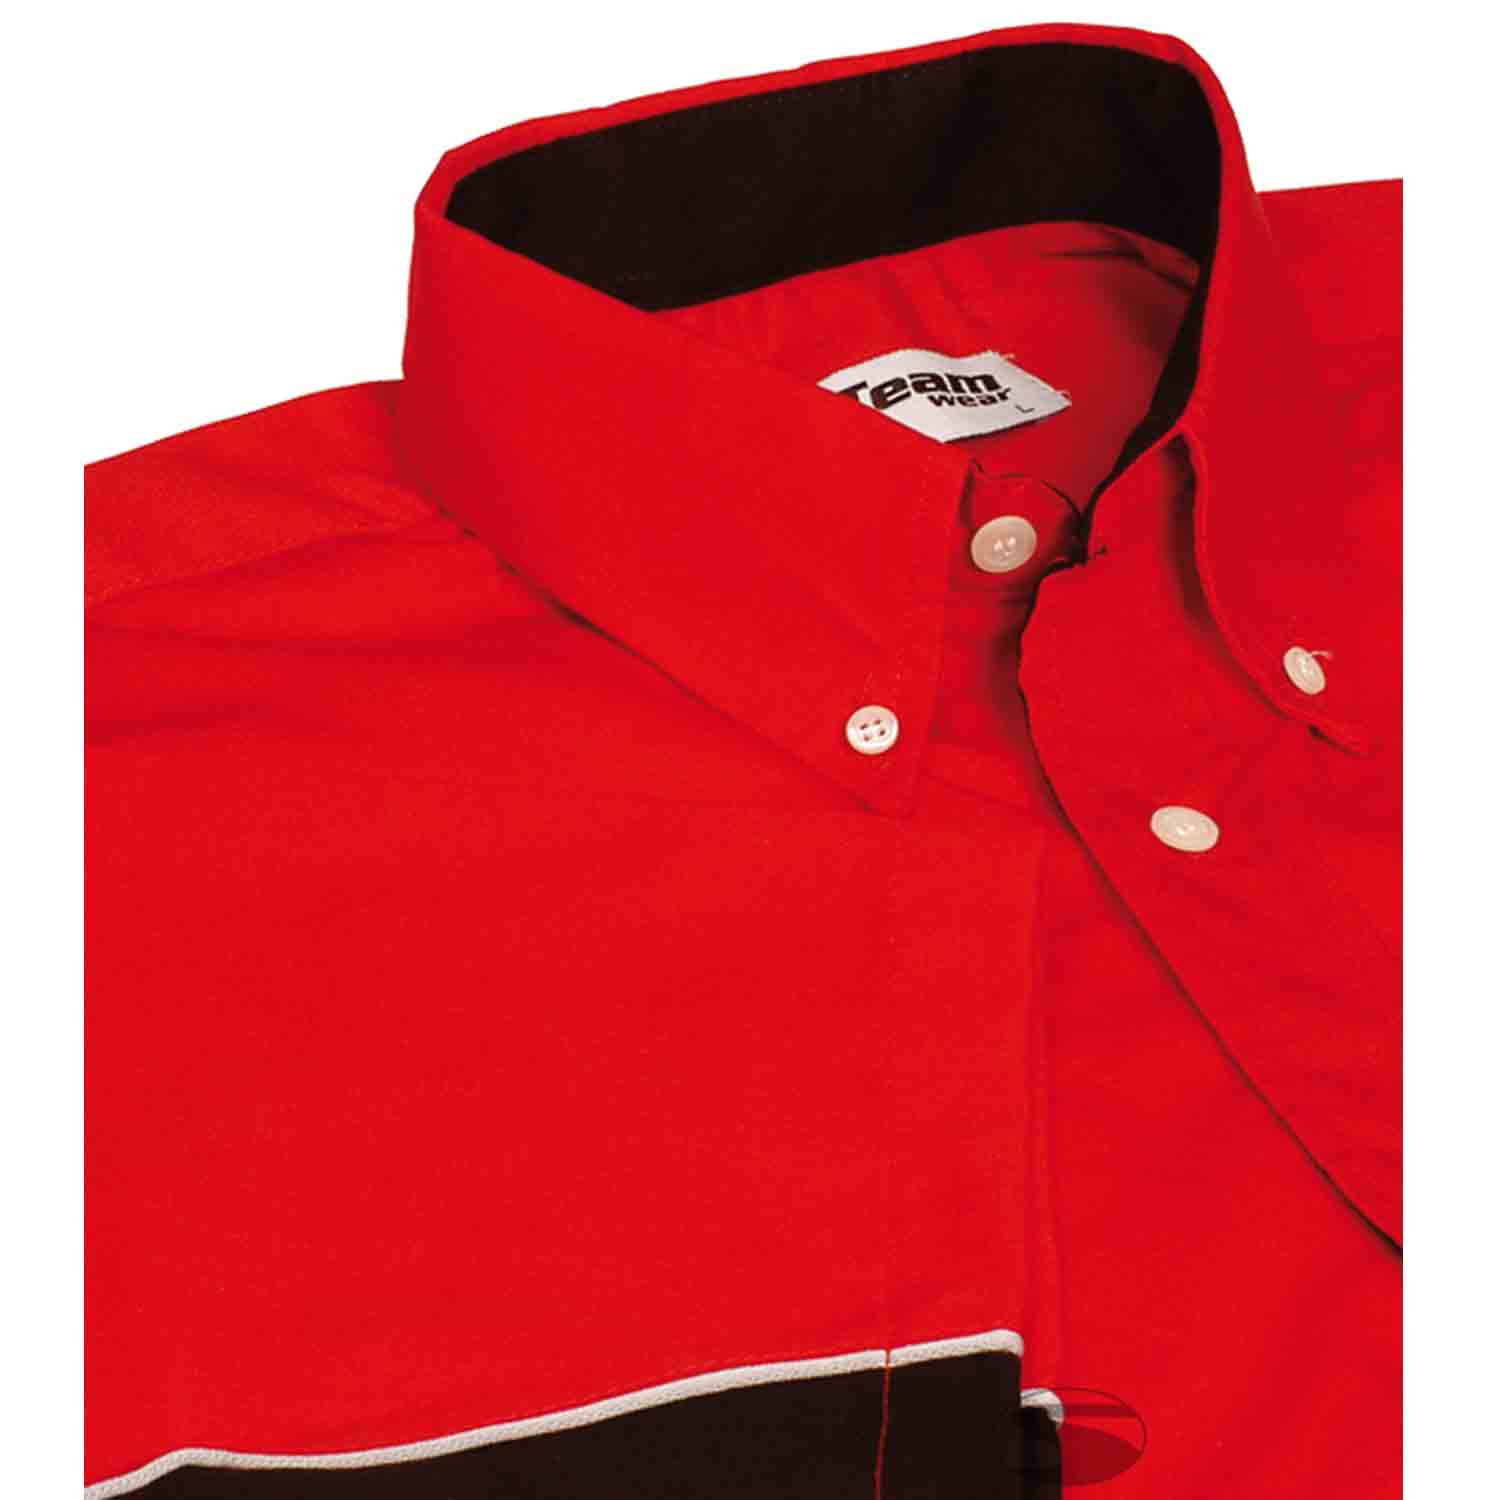 Teamwear Kurzarm Hemd, rot/schwarz